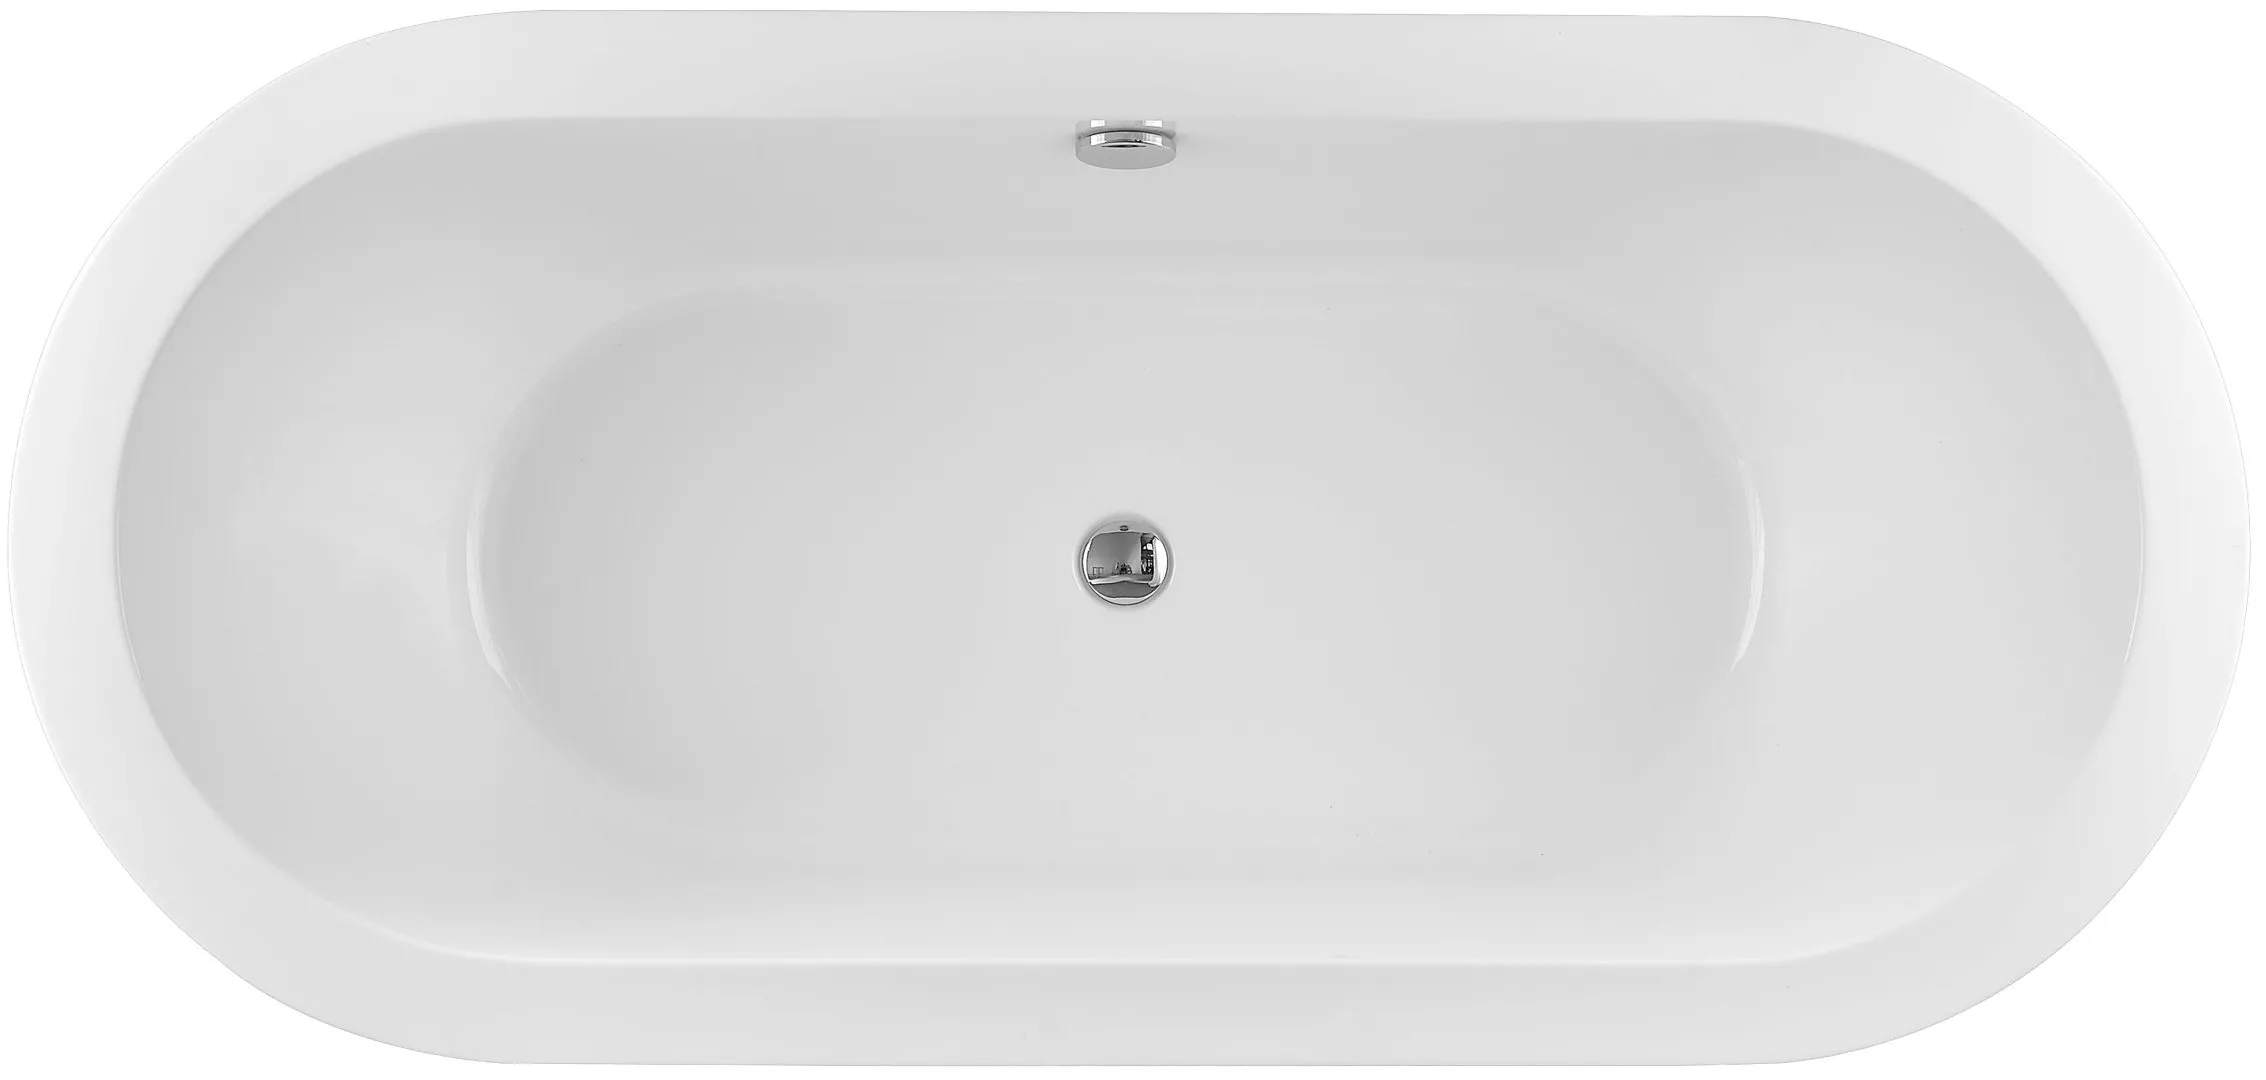 Акриловая ванна Swedbe Vita 8812, цвет белый - фото 1